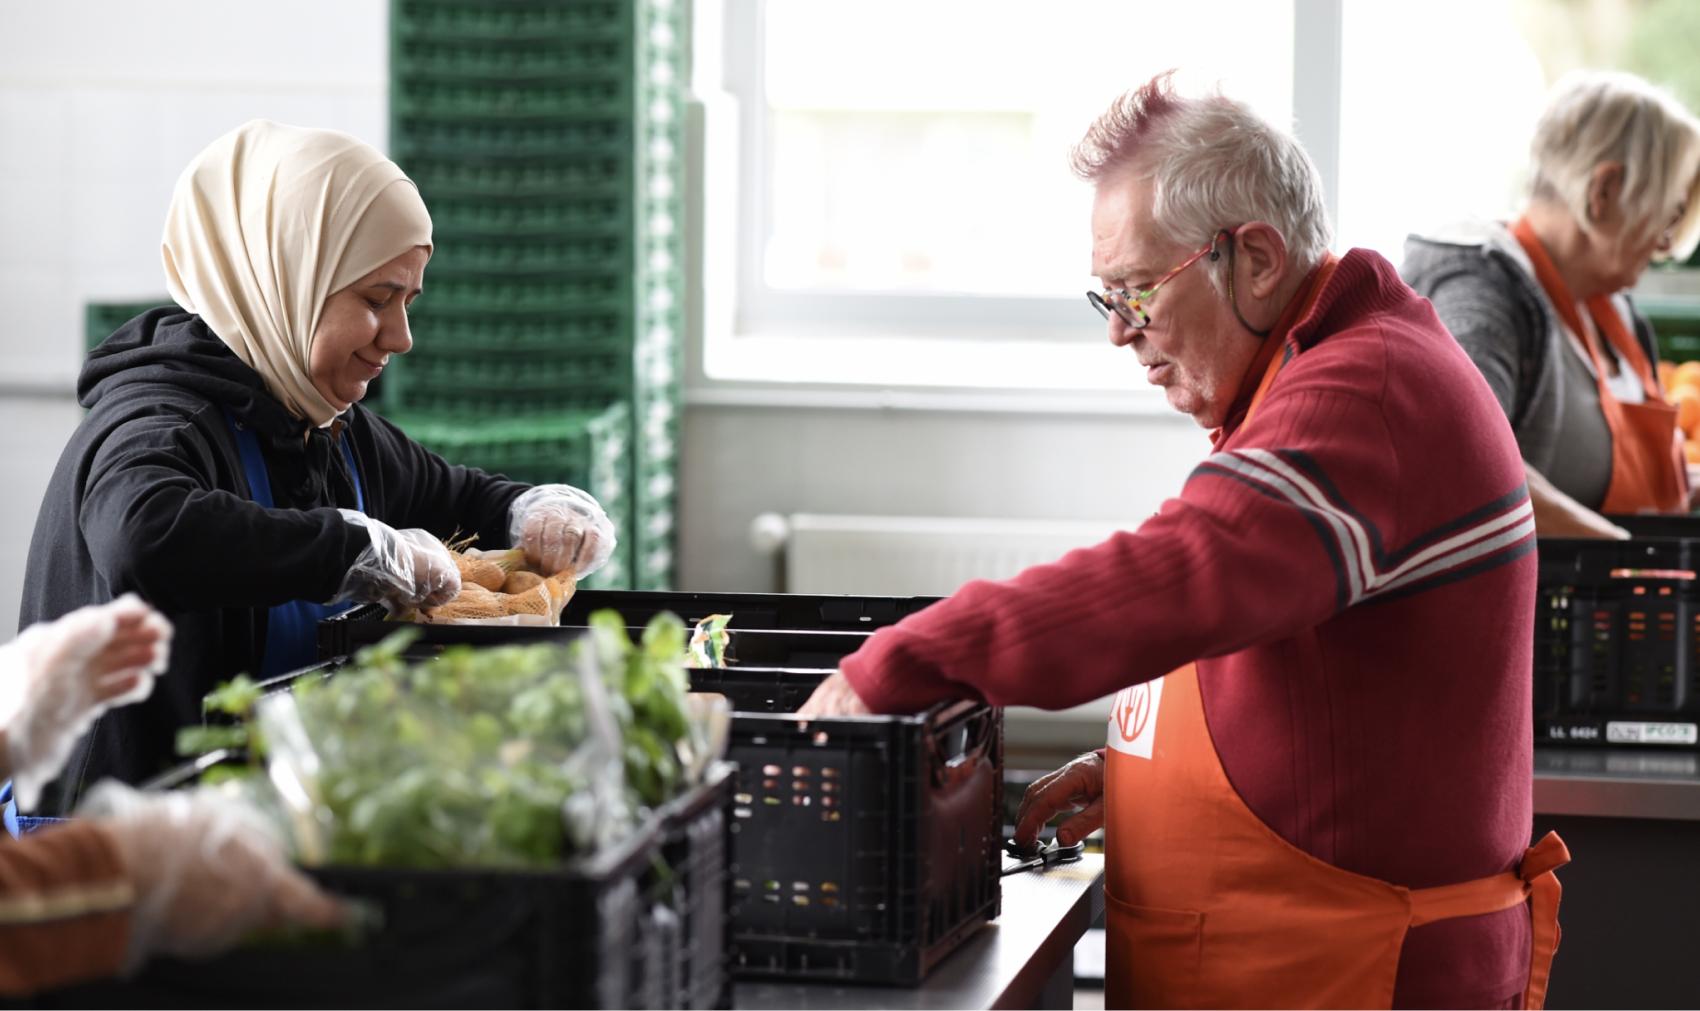 Sirkka Jendis: „Lebensmittelspenden müssen dringend vereinfacht werden“